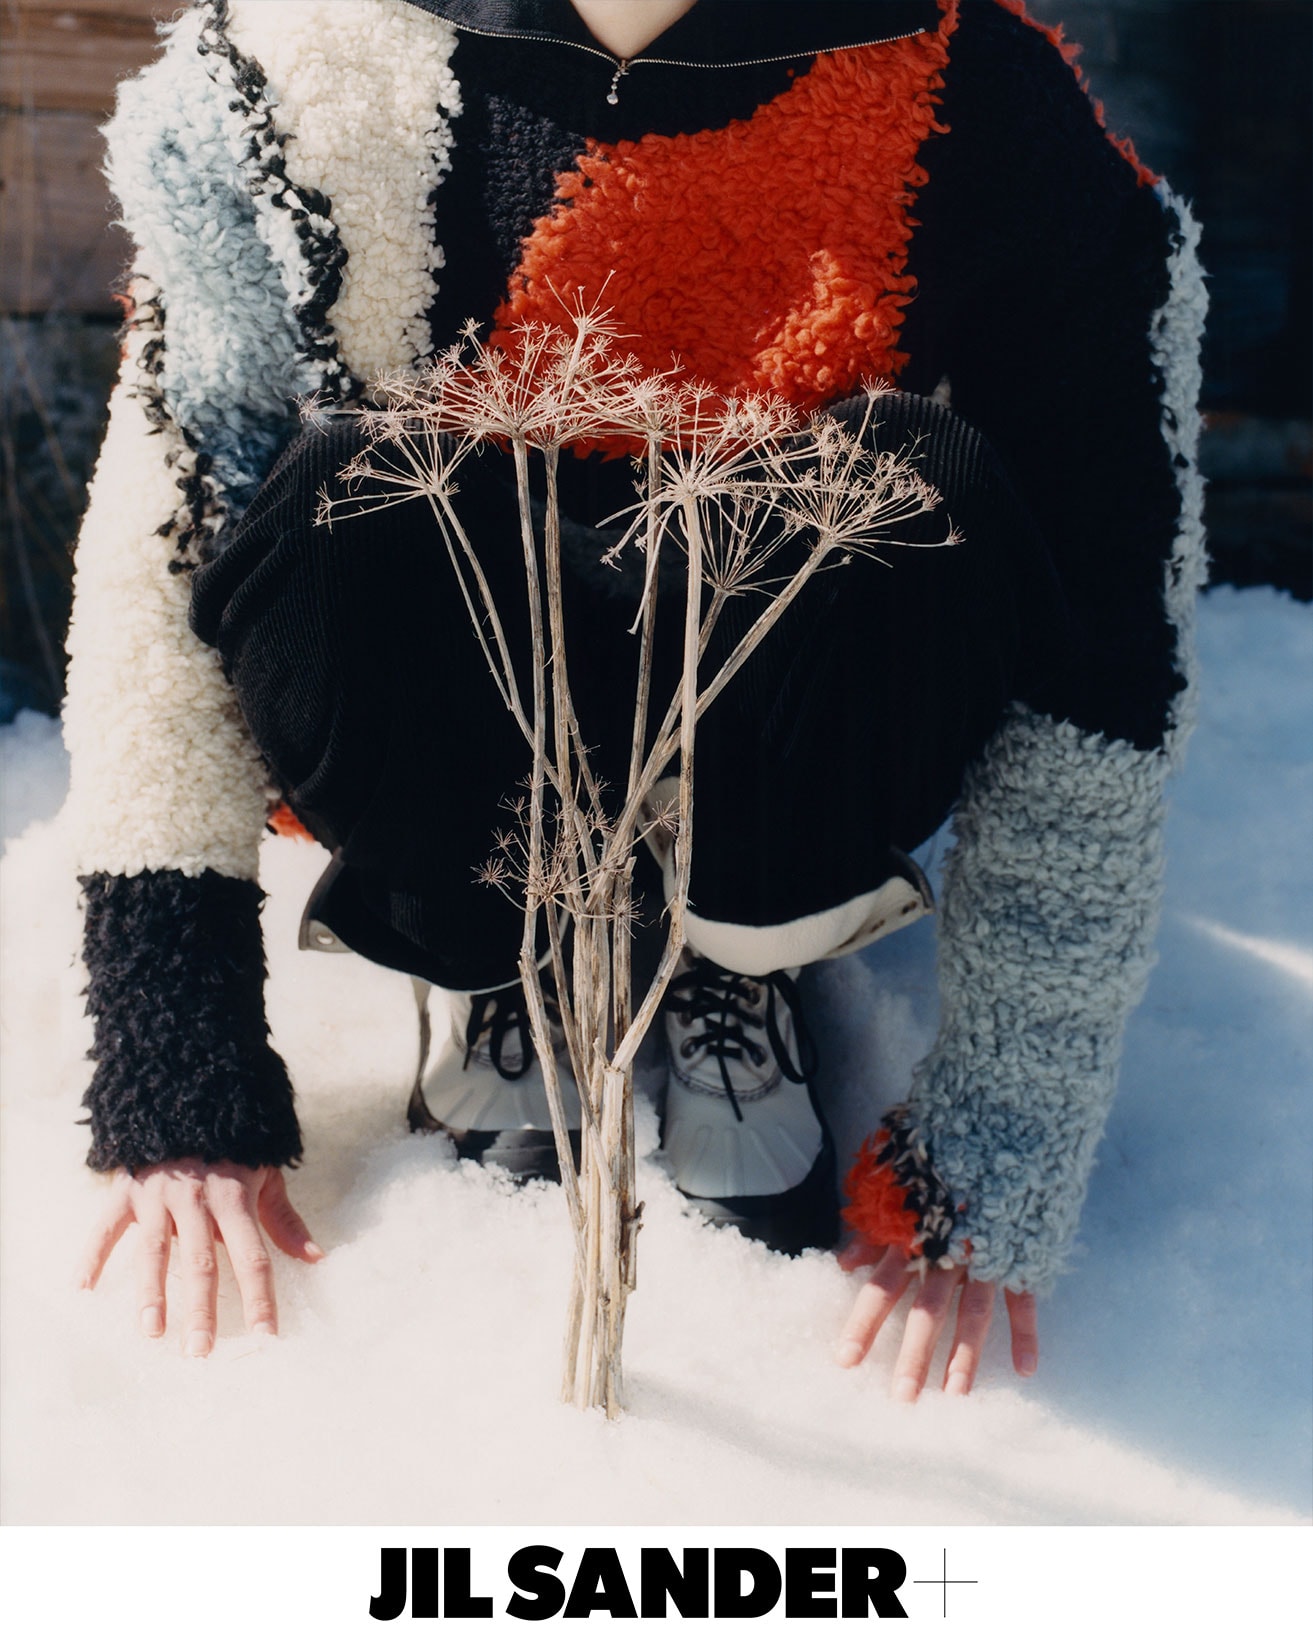 Jil Sander Fall Winter 2021 FW21 Campaign Sweater Knitwear Snow